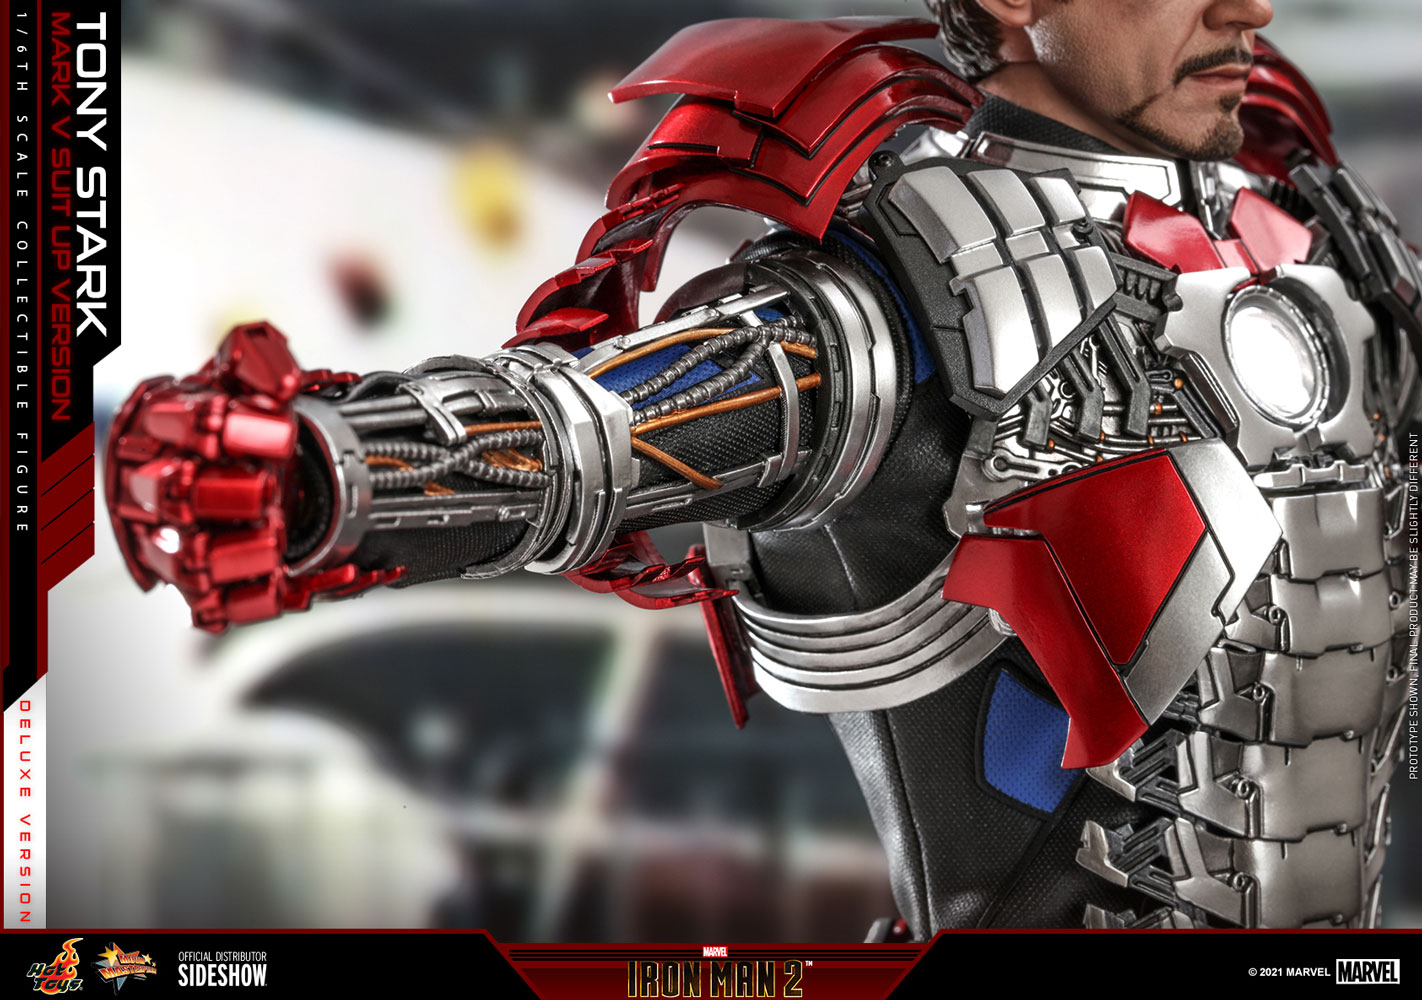 Tony Stark (Mark V Suit Up Version) Deluxe- Prototype Shown